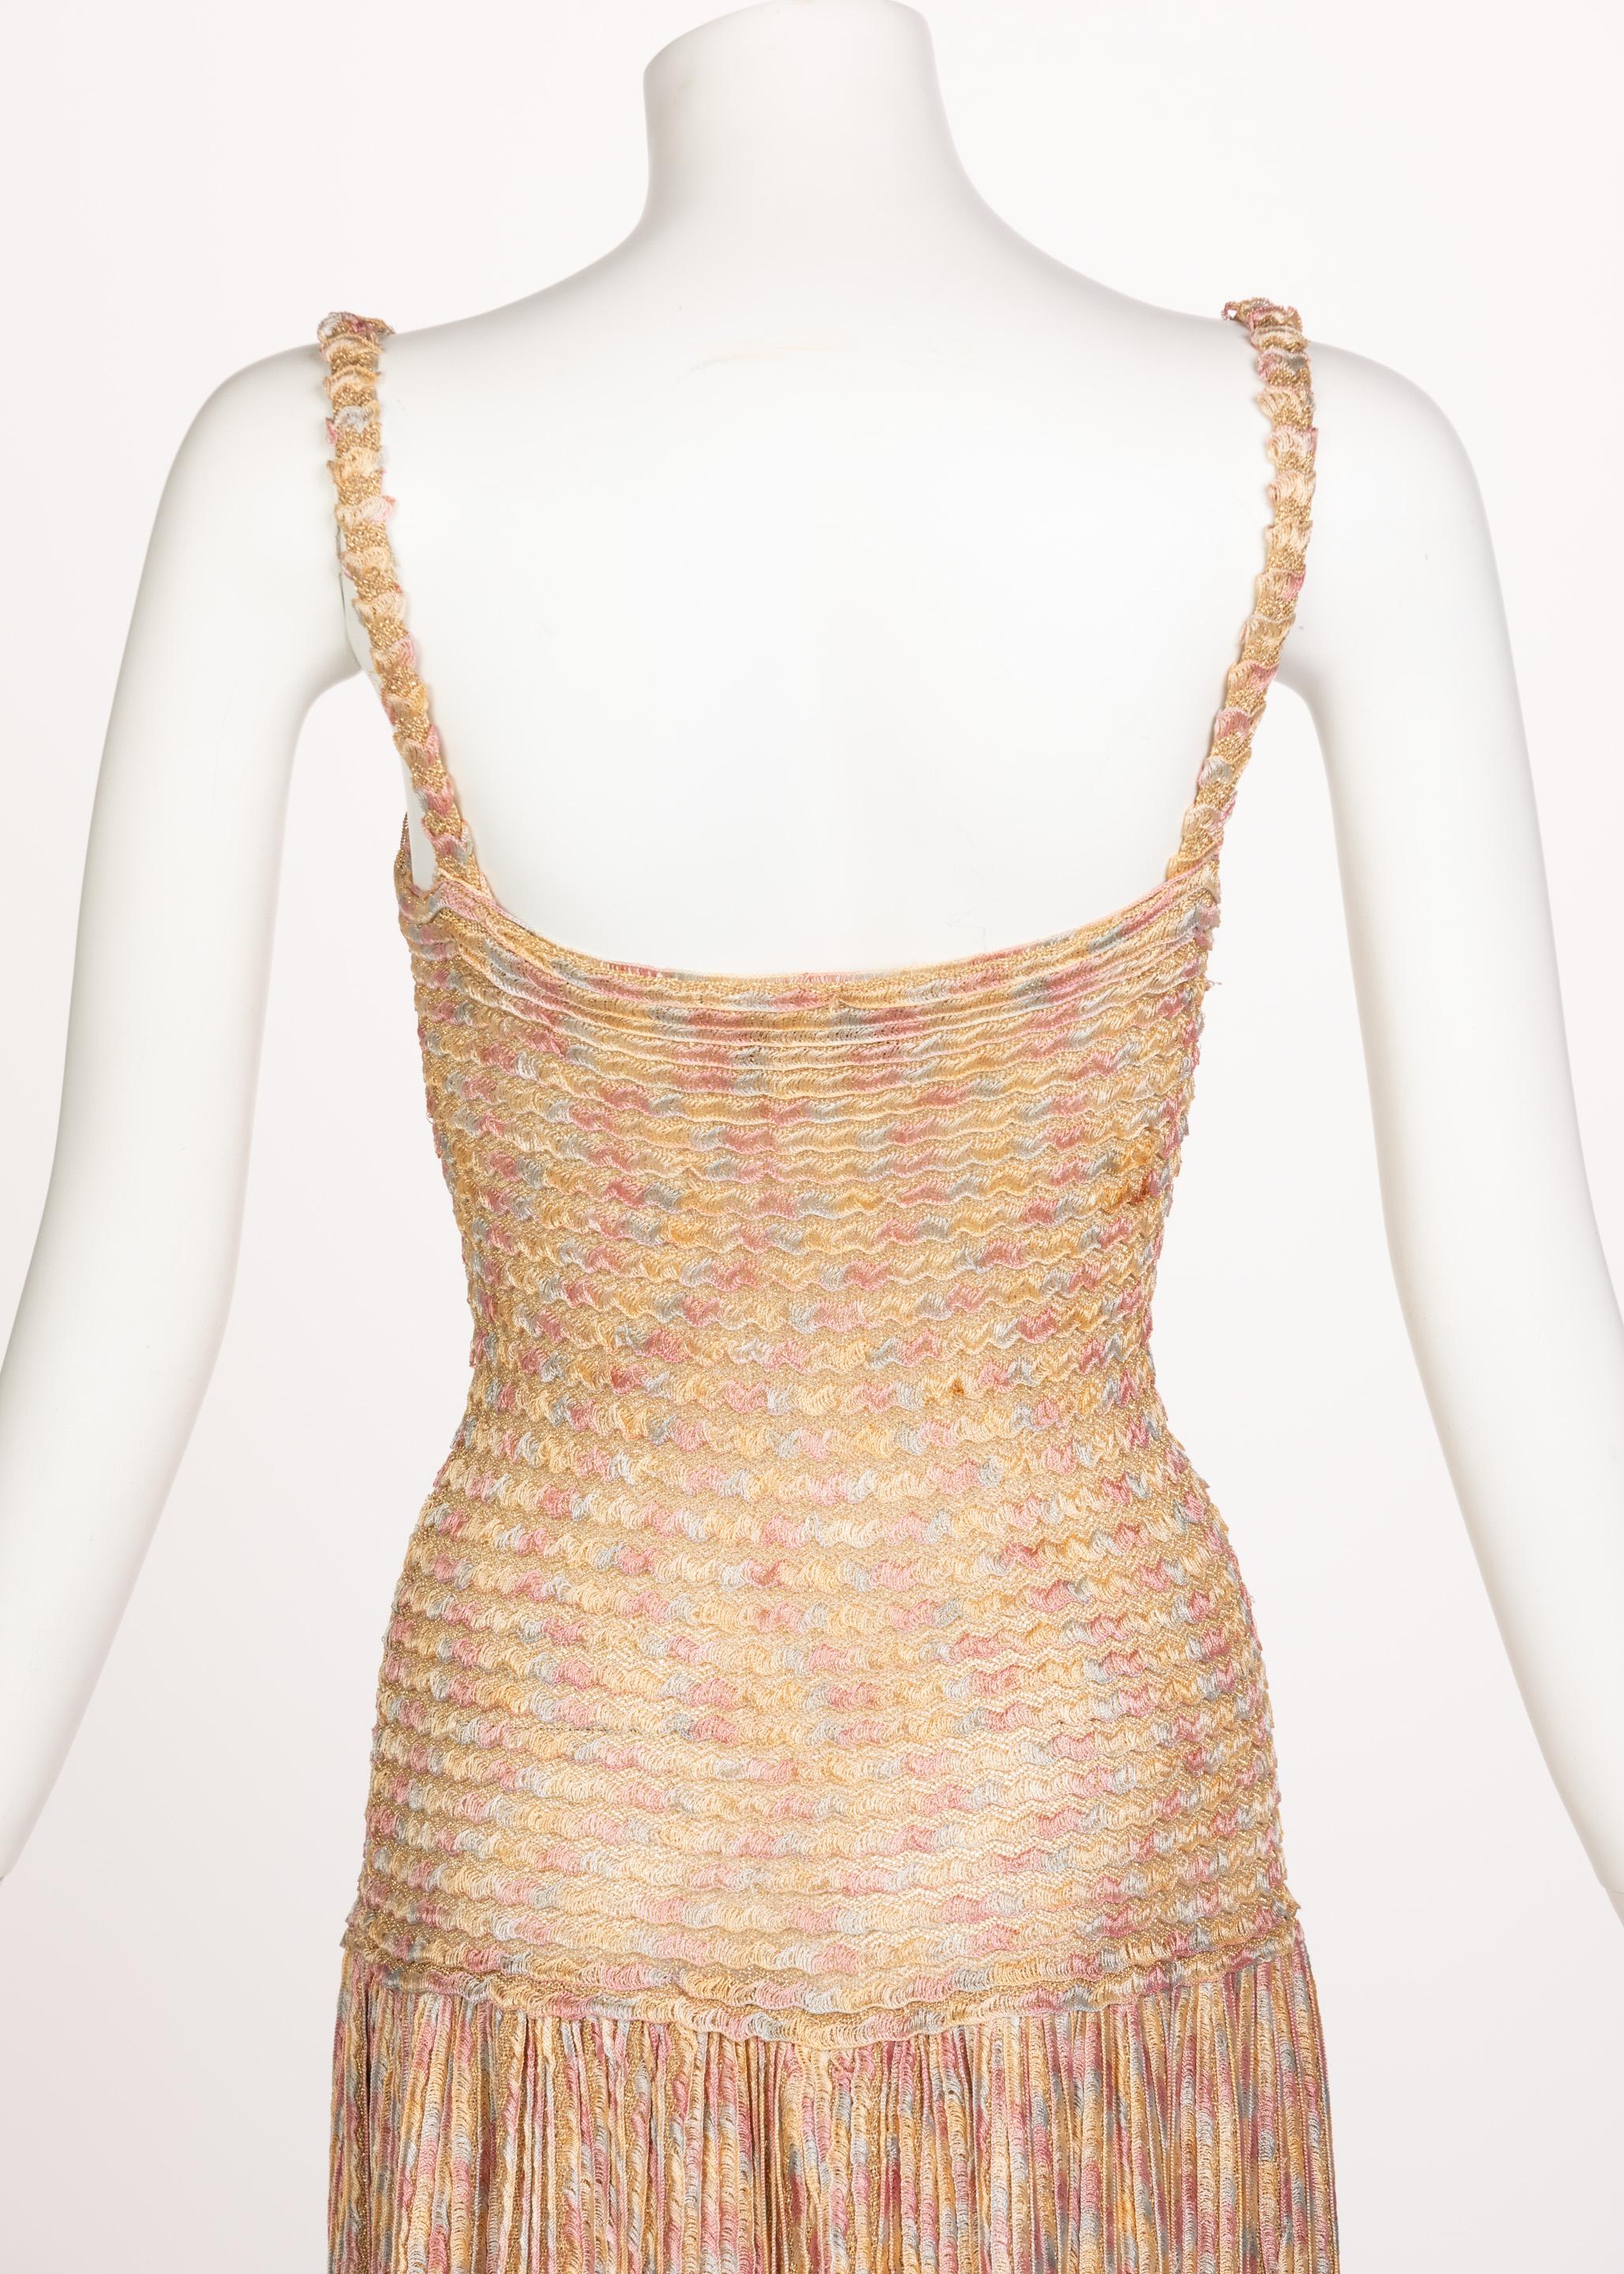 Missoni Pink Gold Knit Maxi Dress Cardigan Necklace Beret Set, 1970s For Sale 10